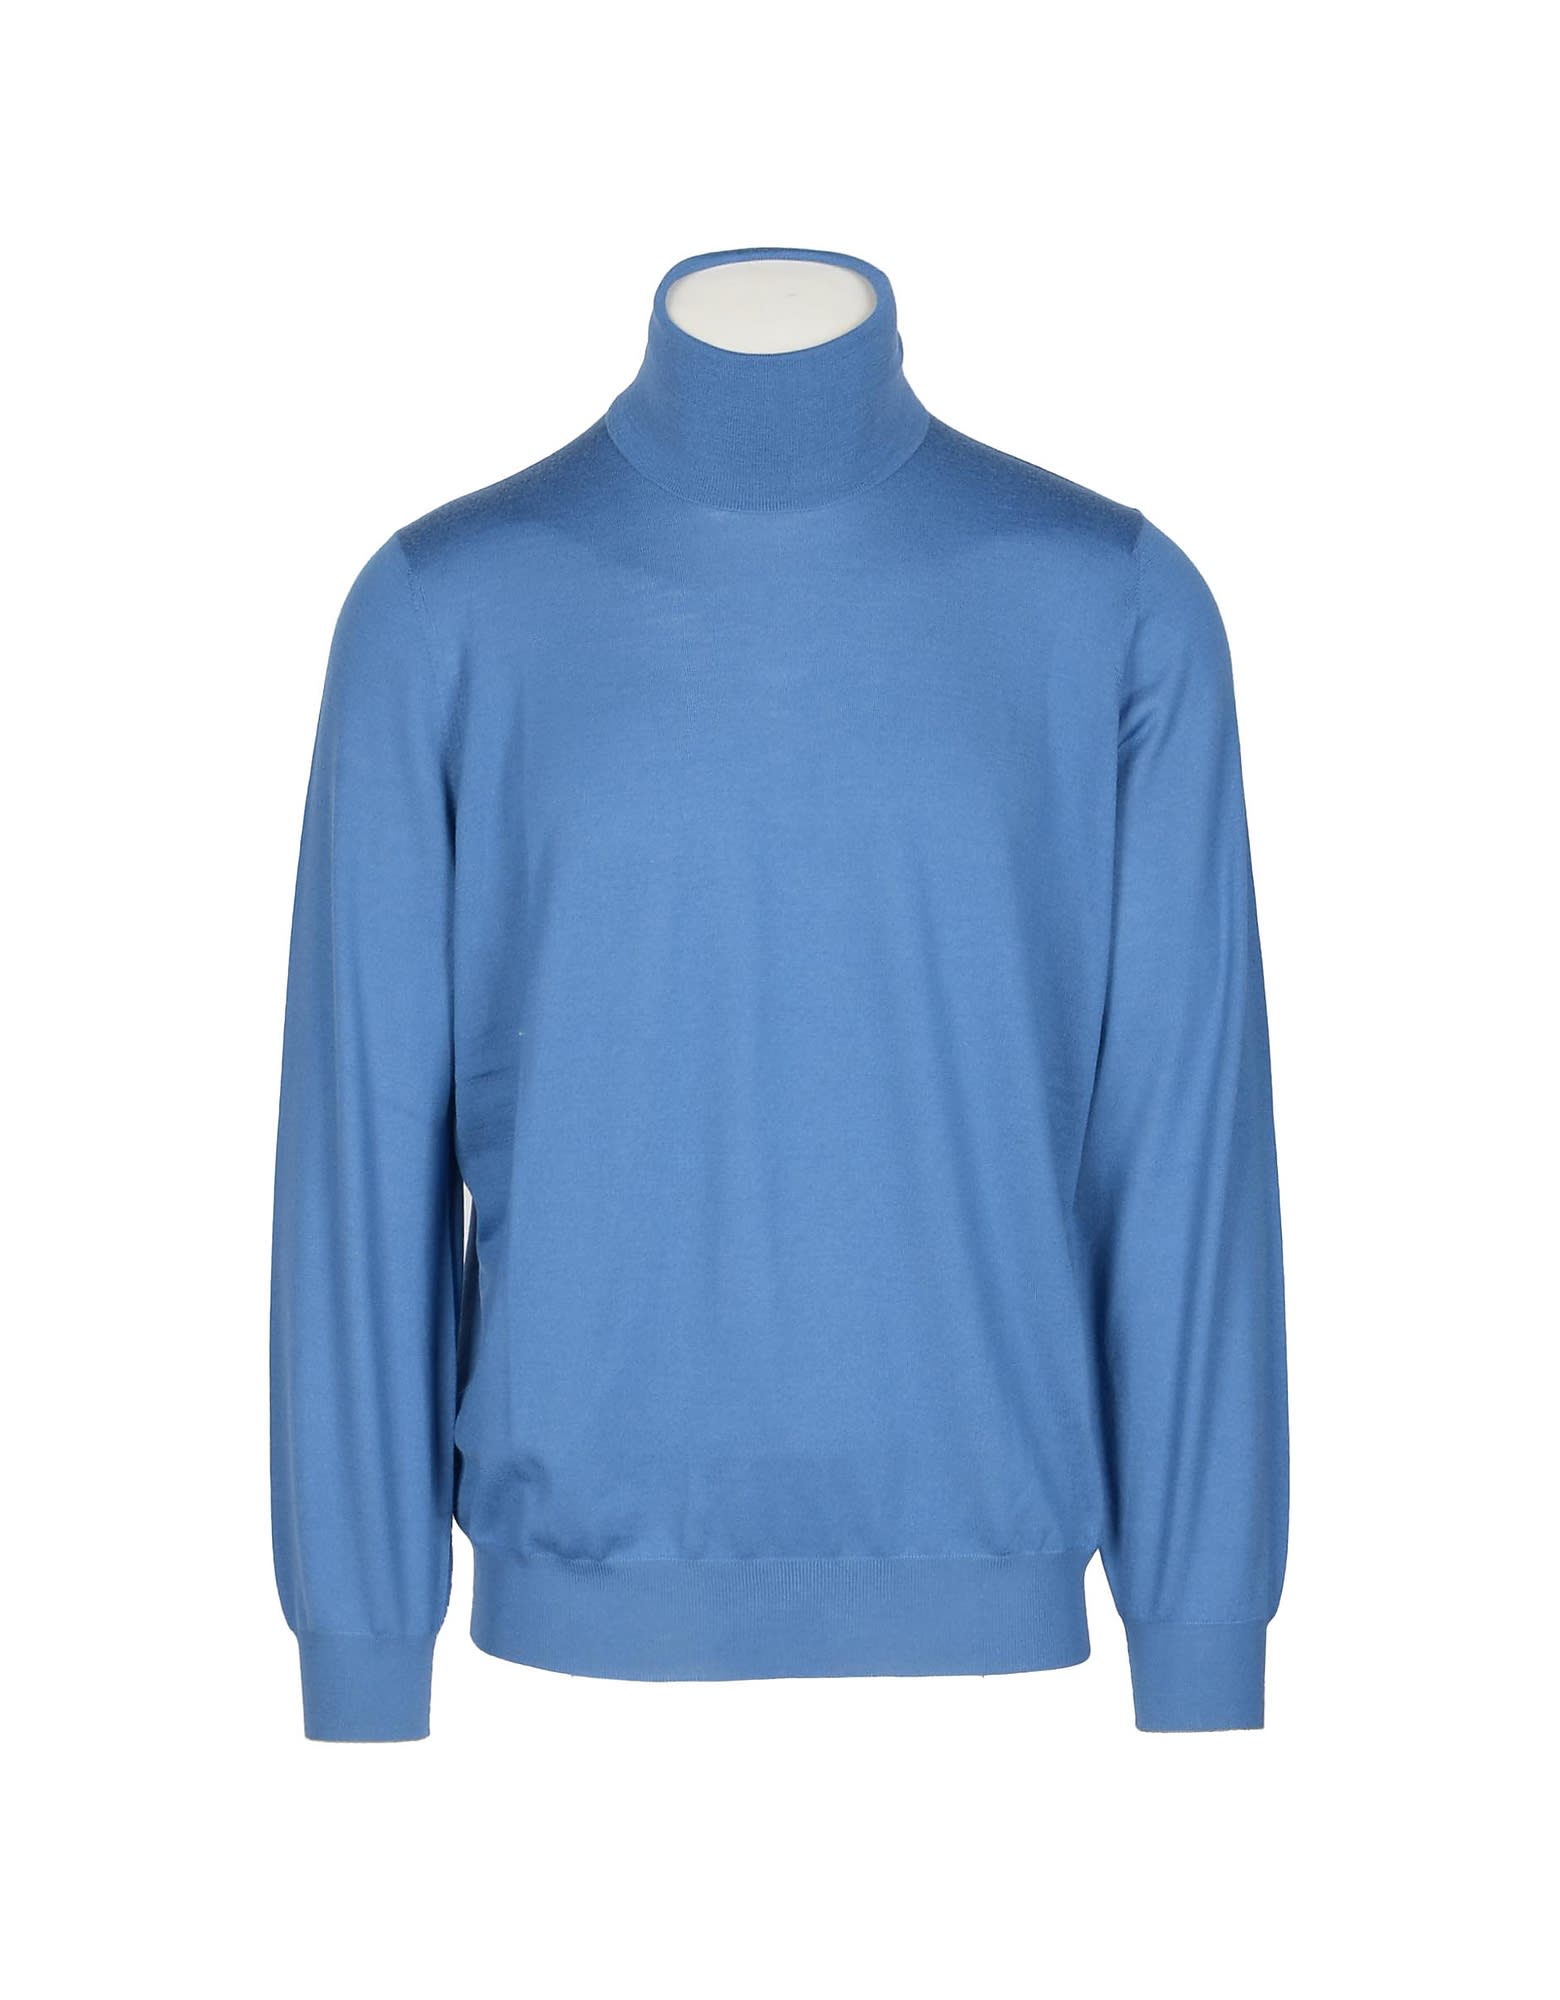 Brunello Cucinelli Mens Light Blue Sweater